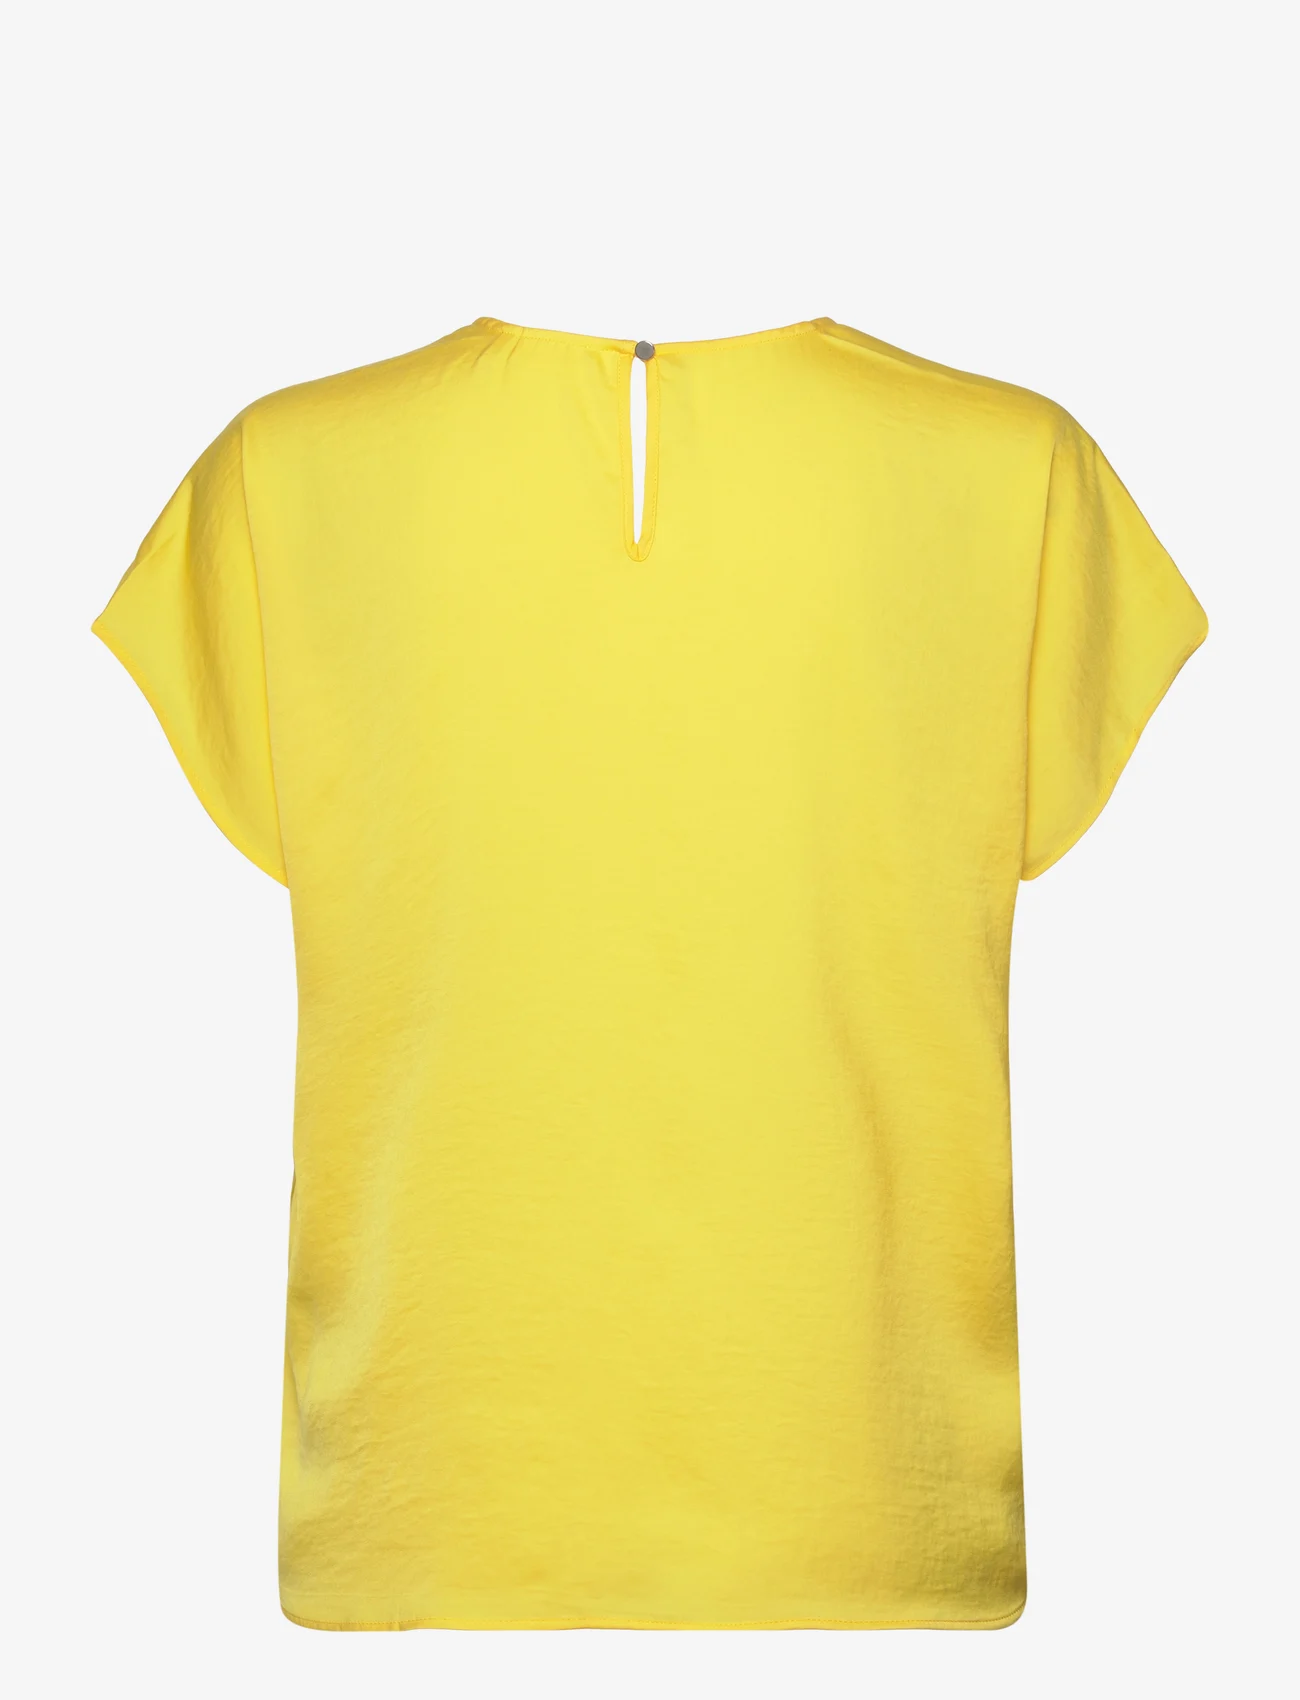 InWear - RindaIW Top - short-sleeved blouses - sunshine - 1